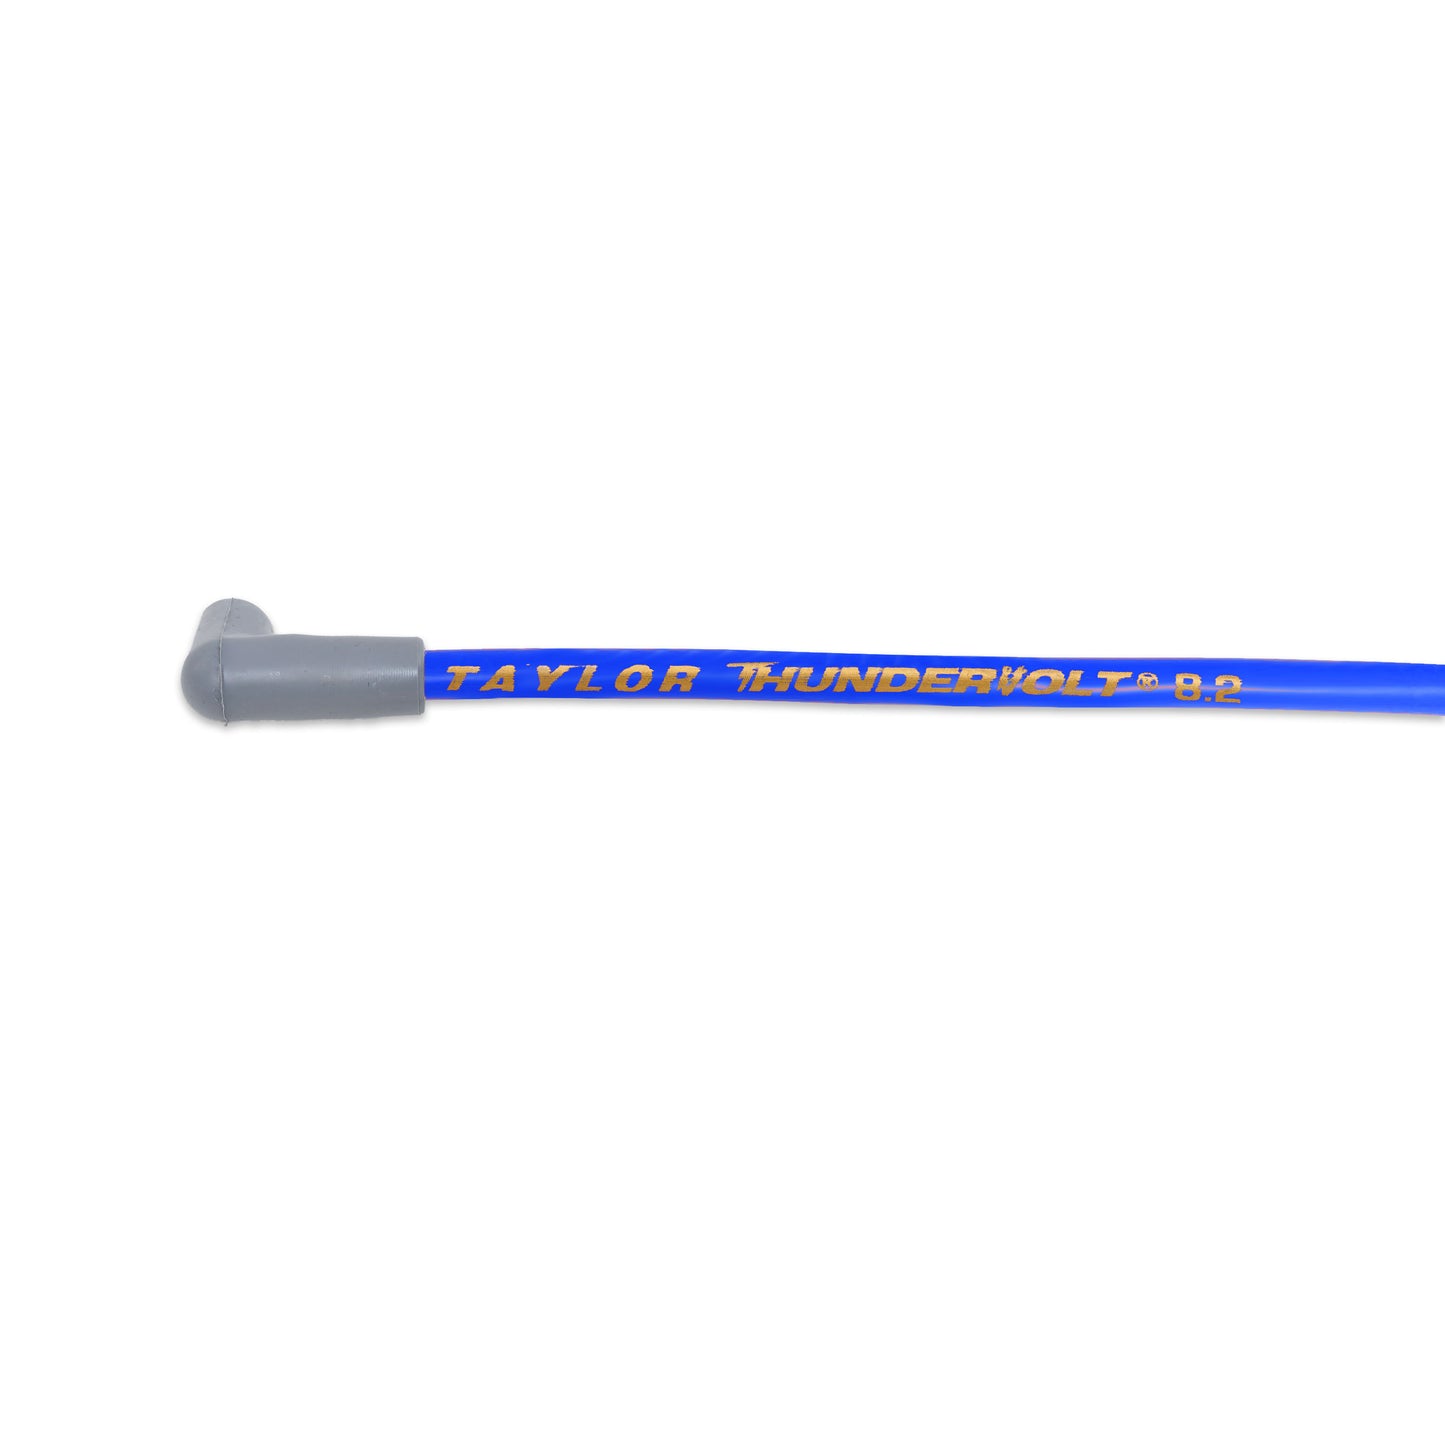 Taylor Cable 84696 8.2mm Thundervolt Custom Spark Plug Wires 6 cyl blue